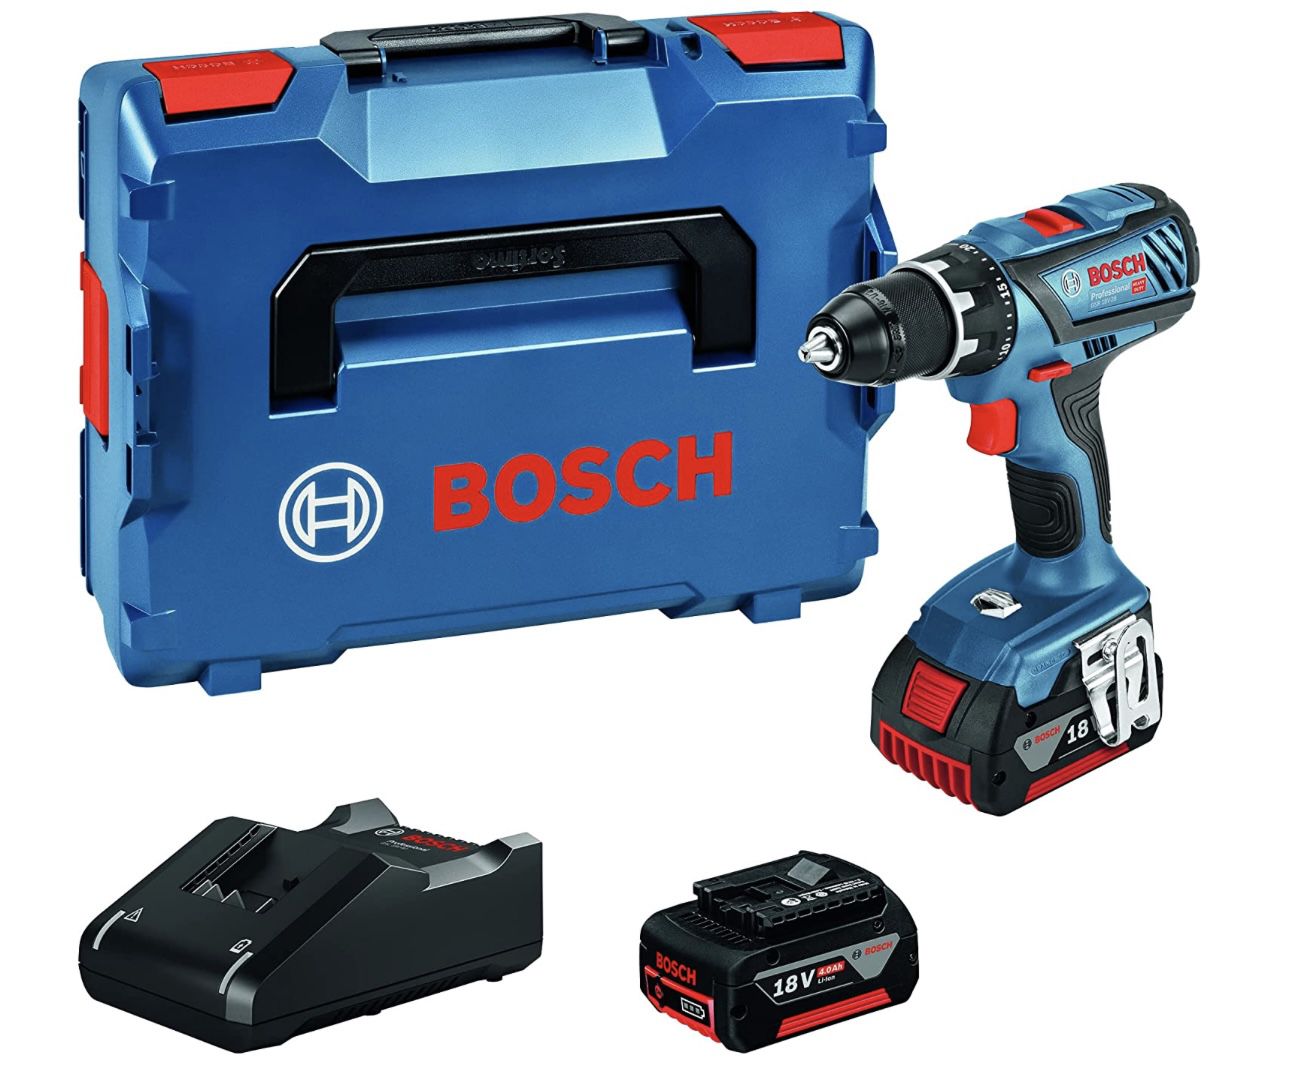 Bosch GSR 18V 28 Akku Bohrschrauber + L Boxx + 2 Akkus 4Ah + Ladegerät für 164,25€ (statt 204€)